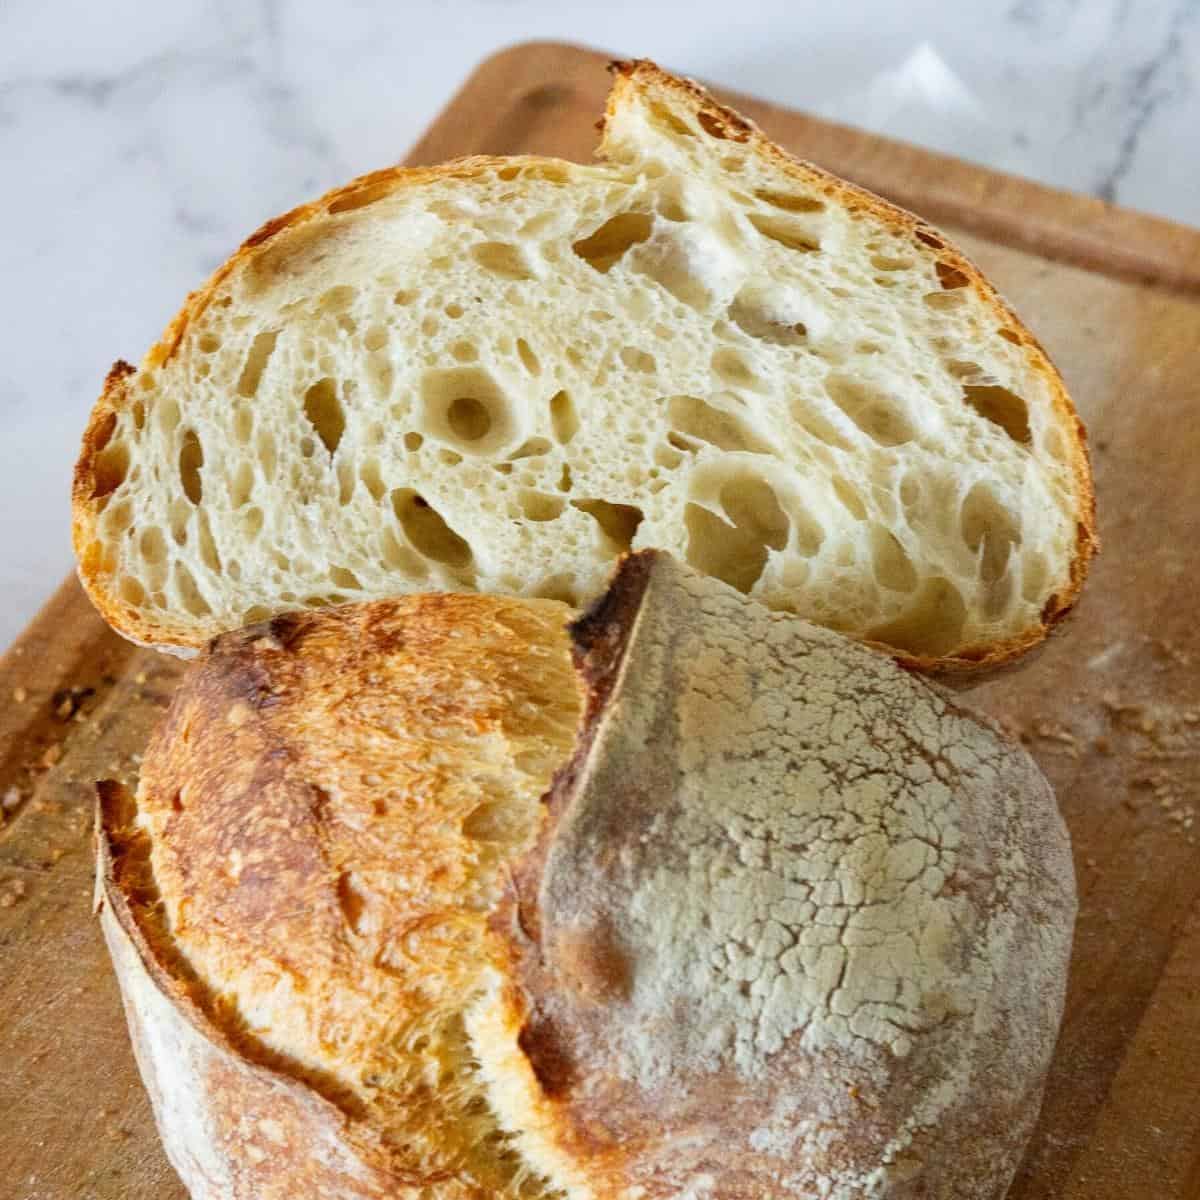 A sliced sourdough loaf bread.